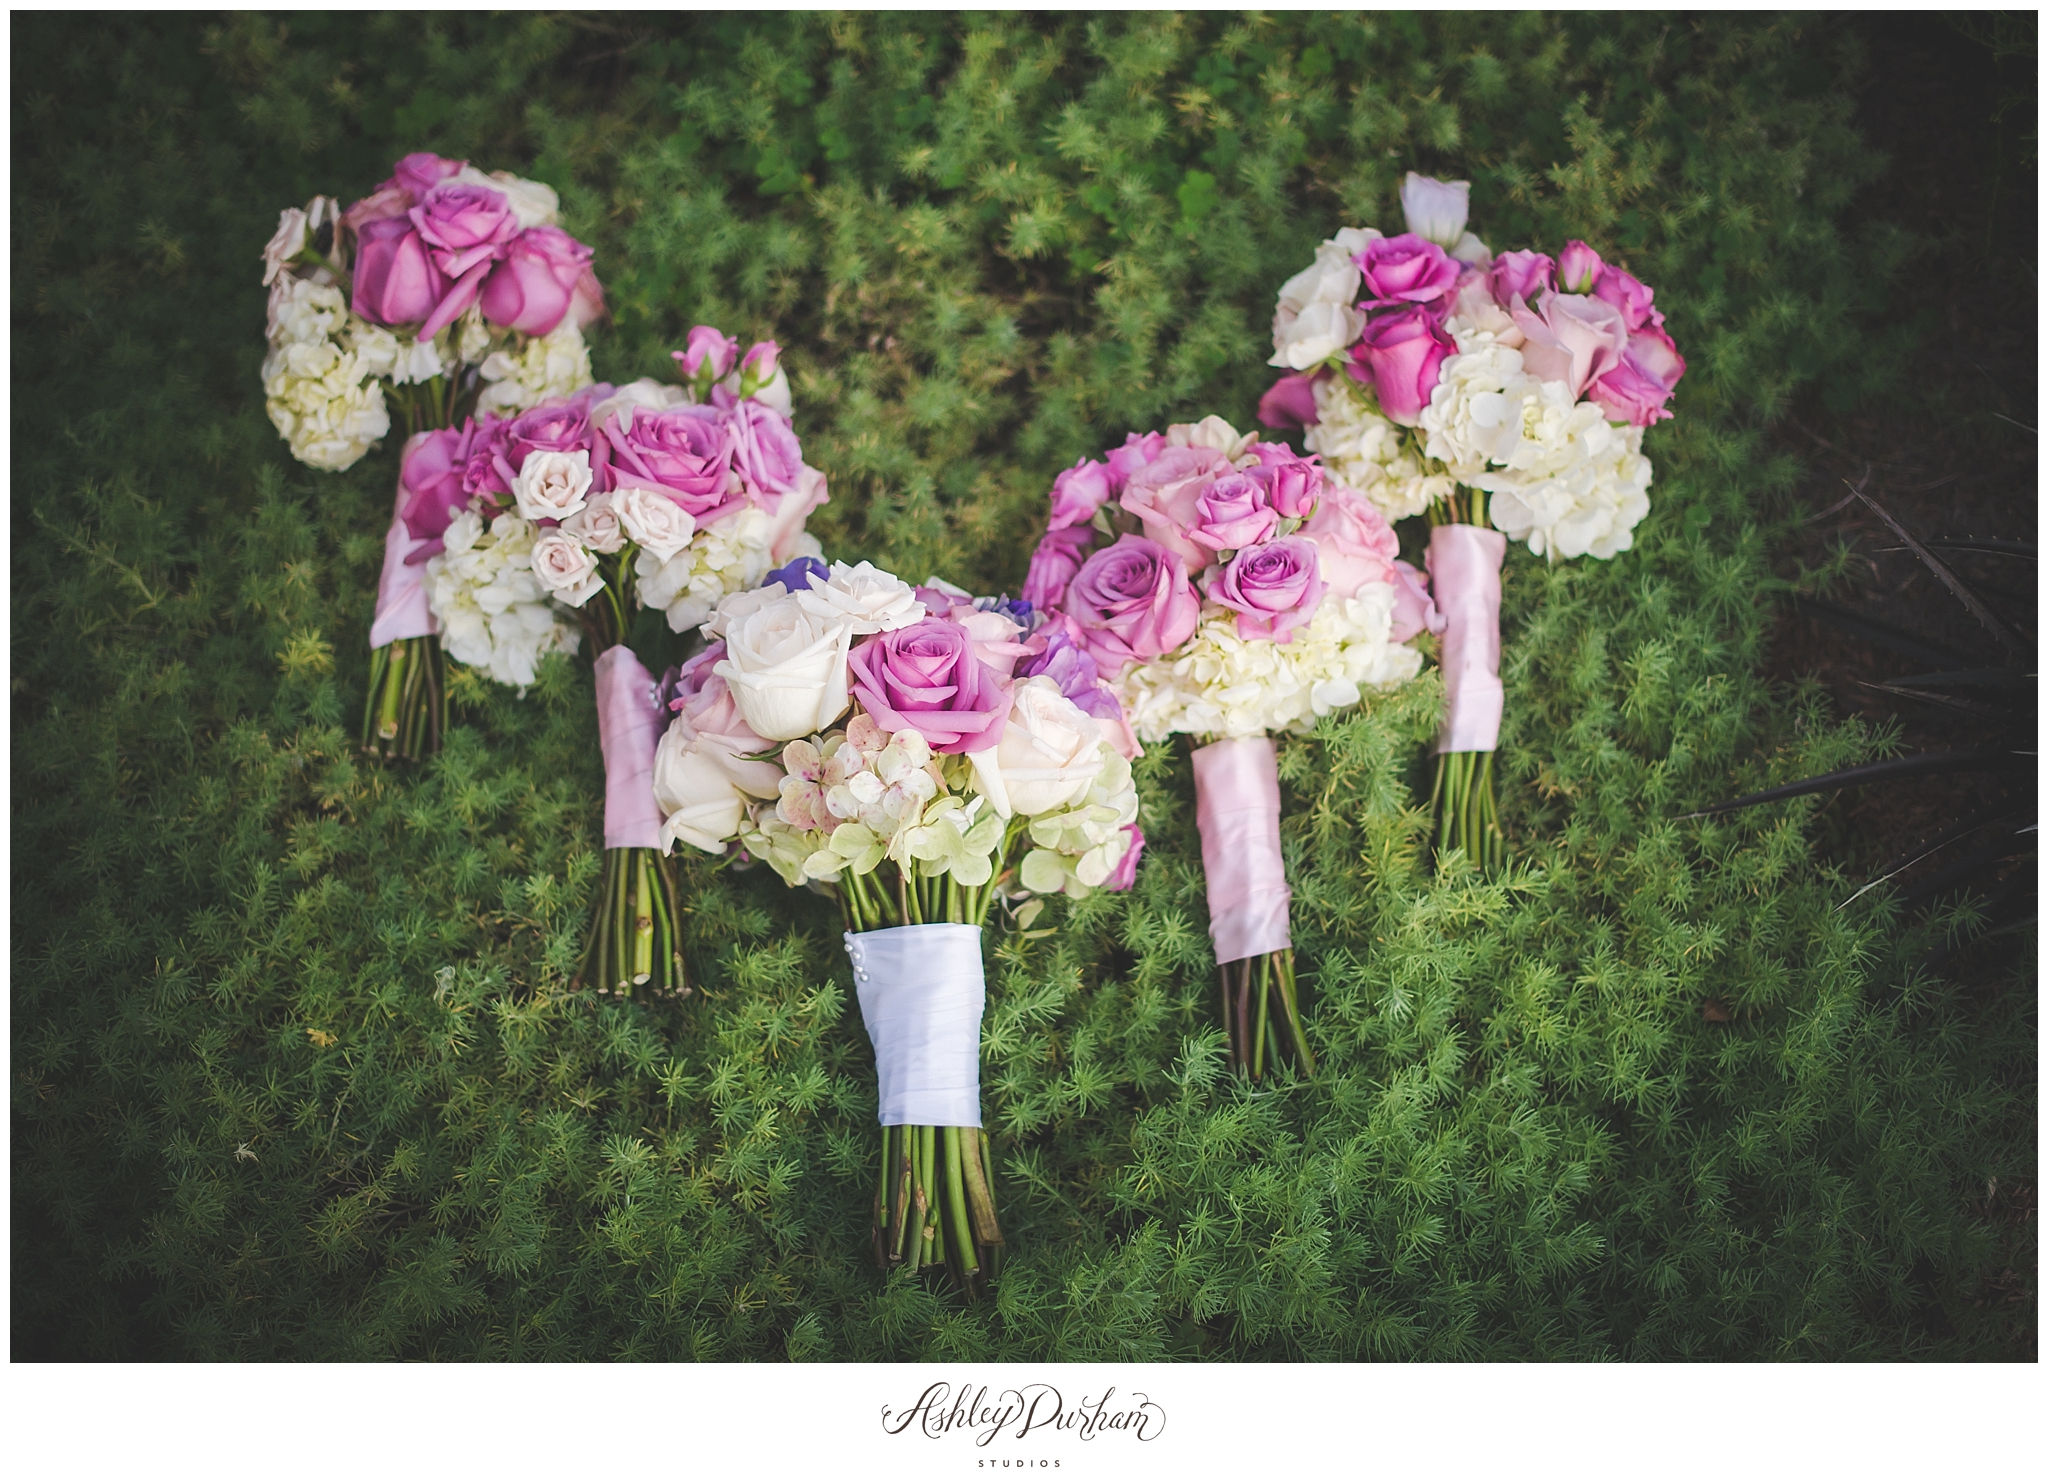 The Pink Daffodil, Pink Daffodil Orange County, Pink Daffodil Irvine, Fairytale wedding floral, fairytale wedding flowers, fairytale bouquet